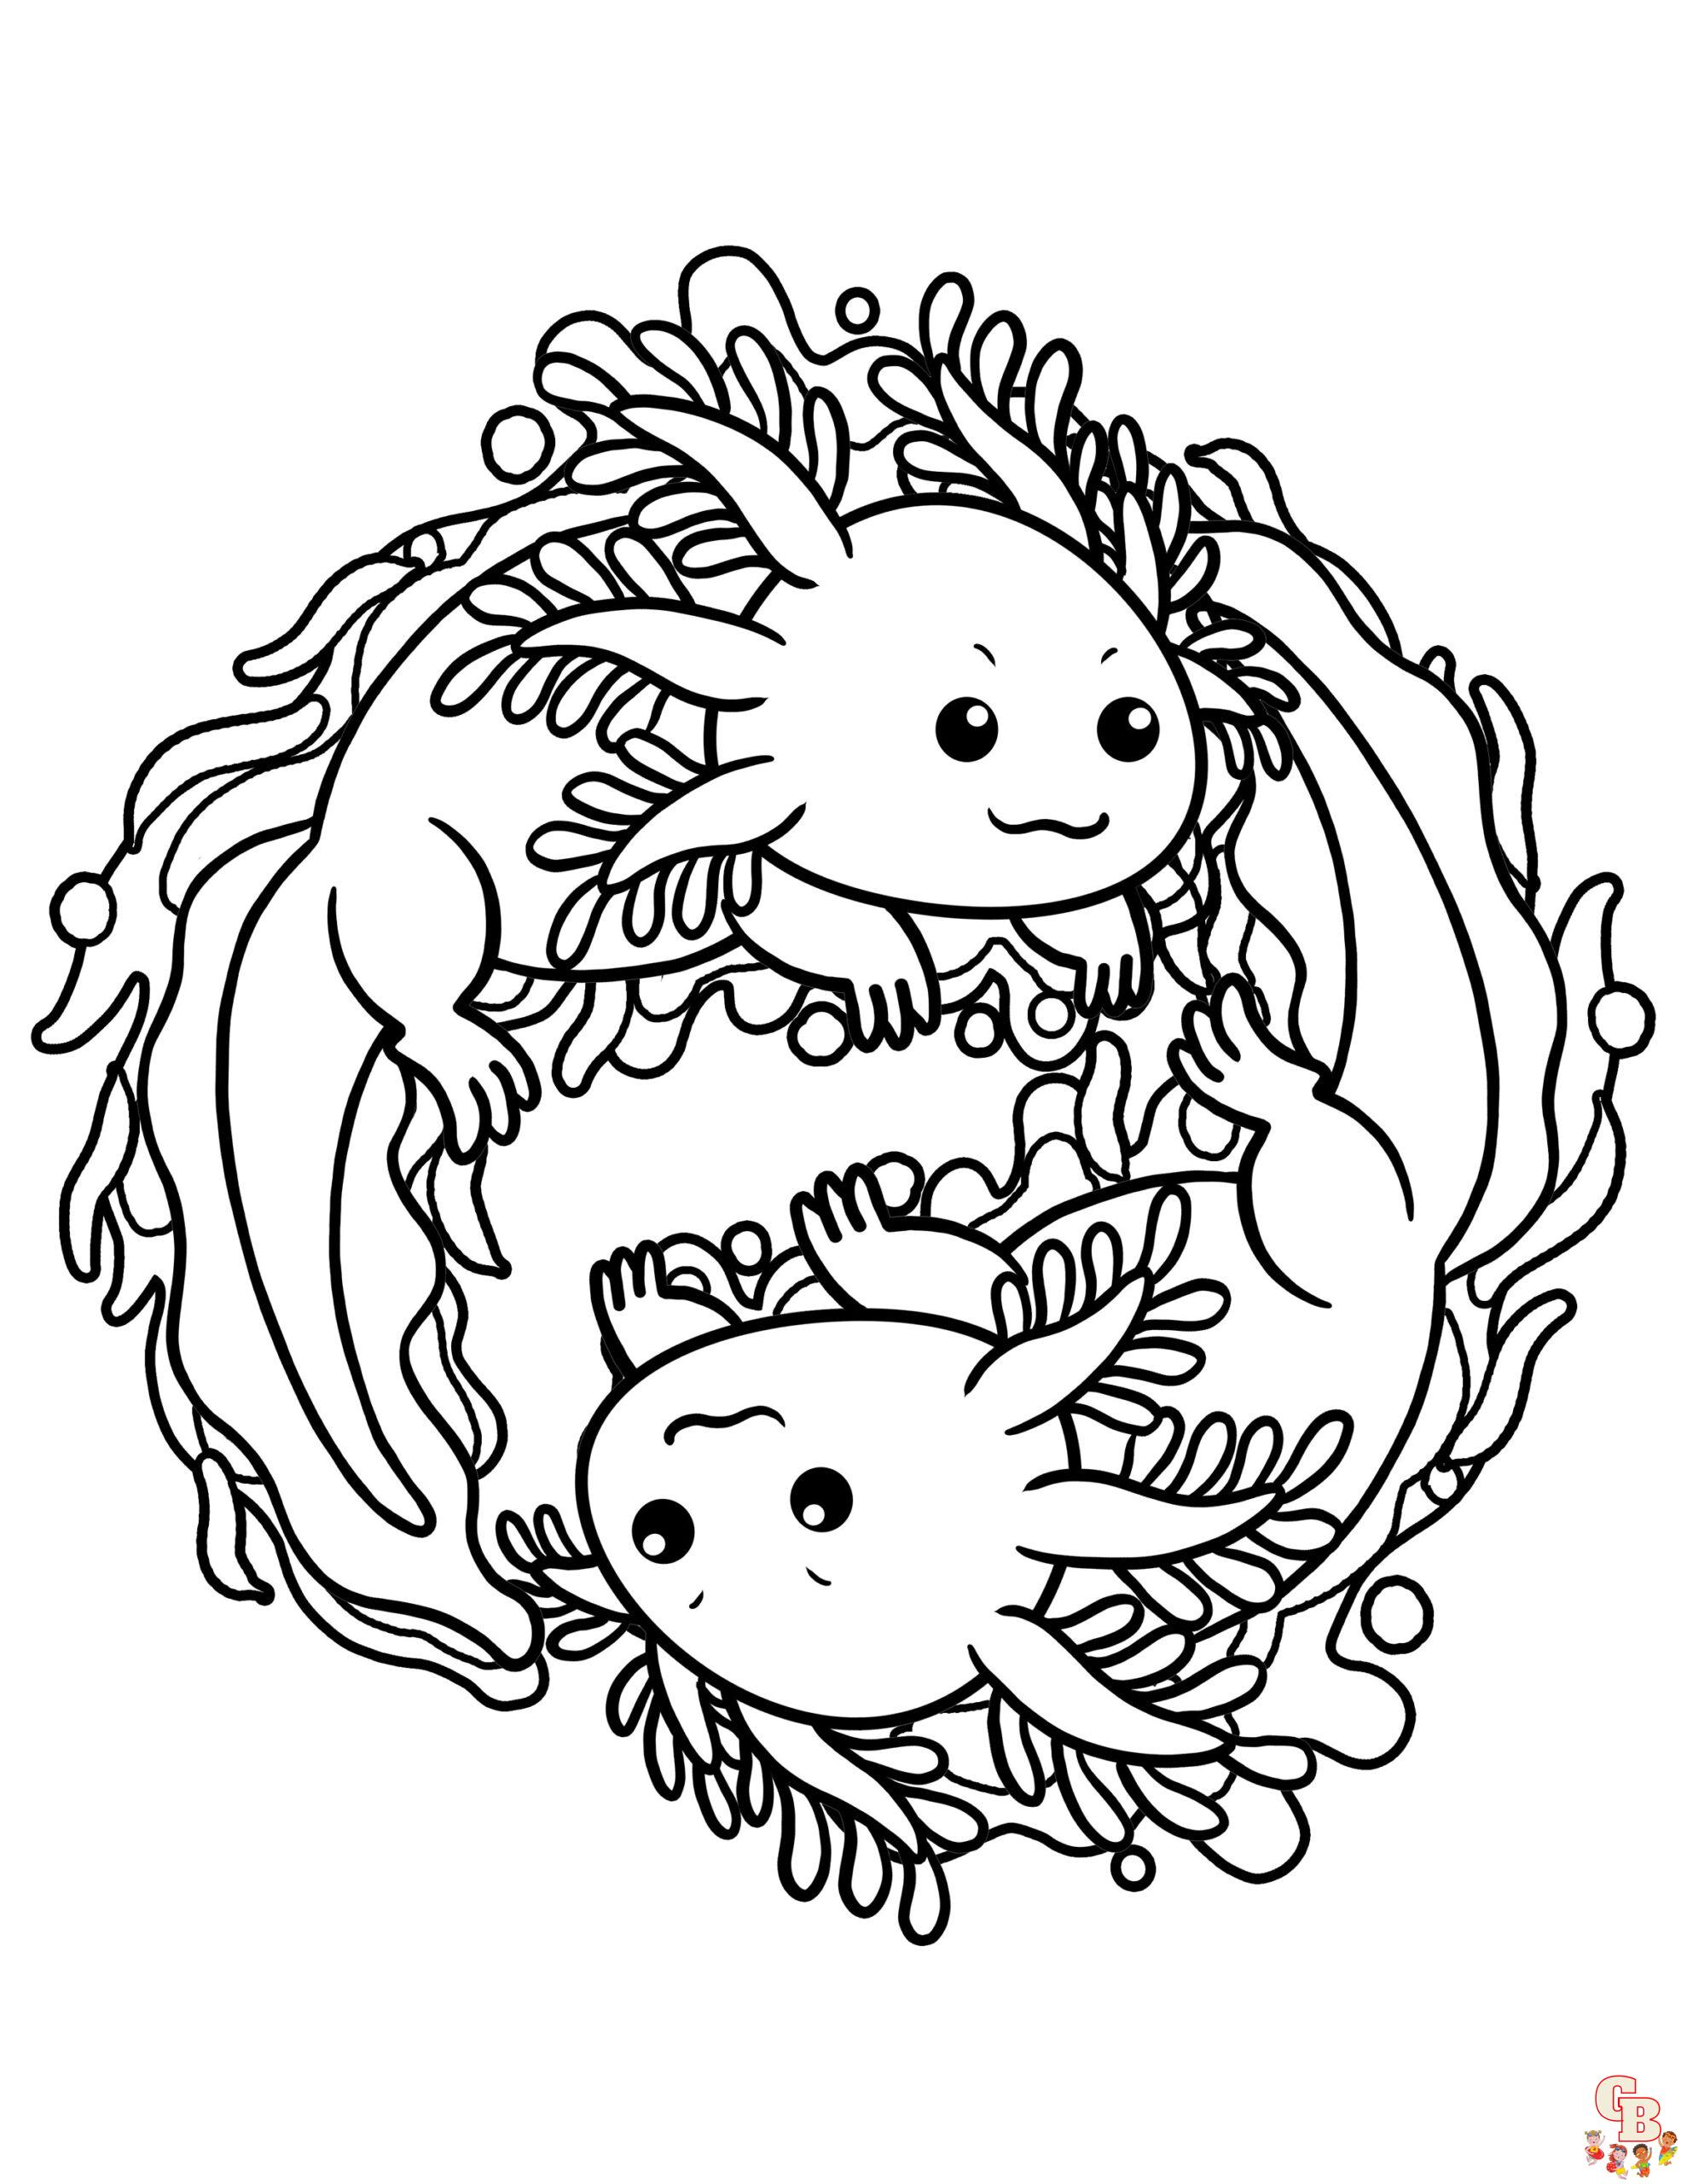 Axolotl zum ausmalen